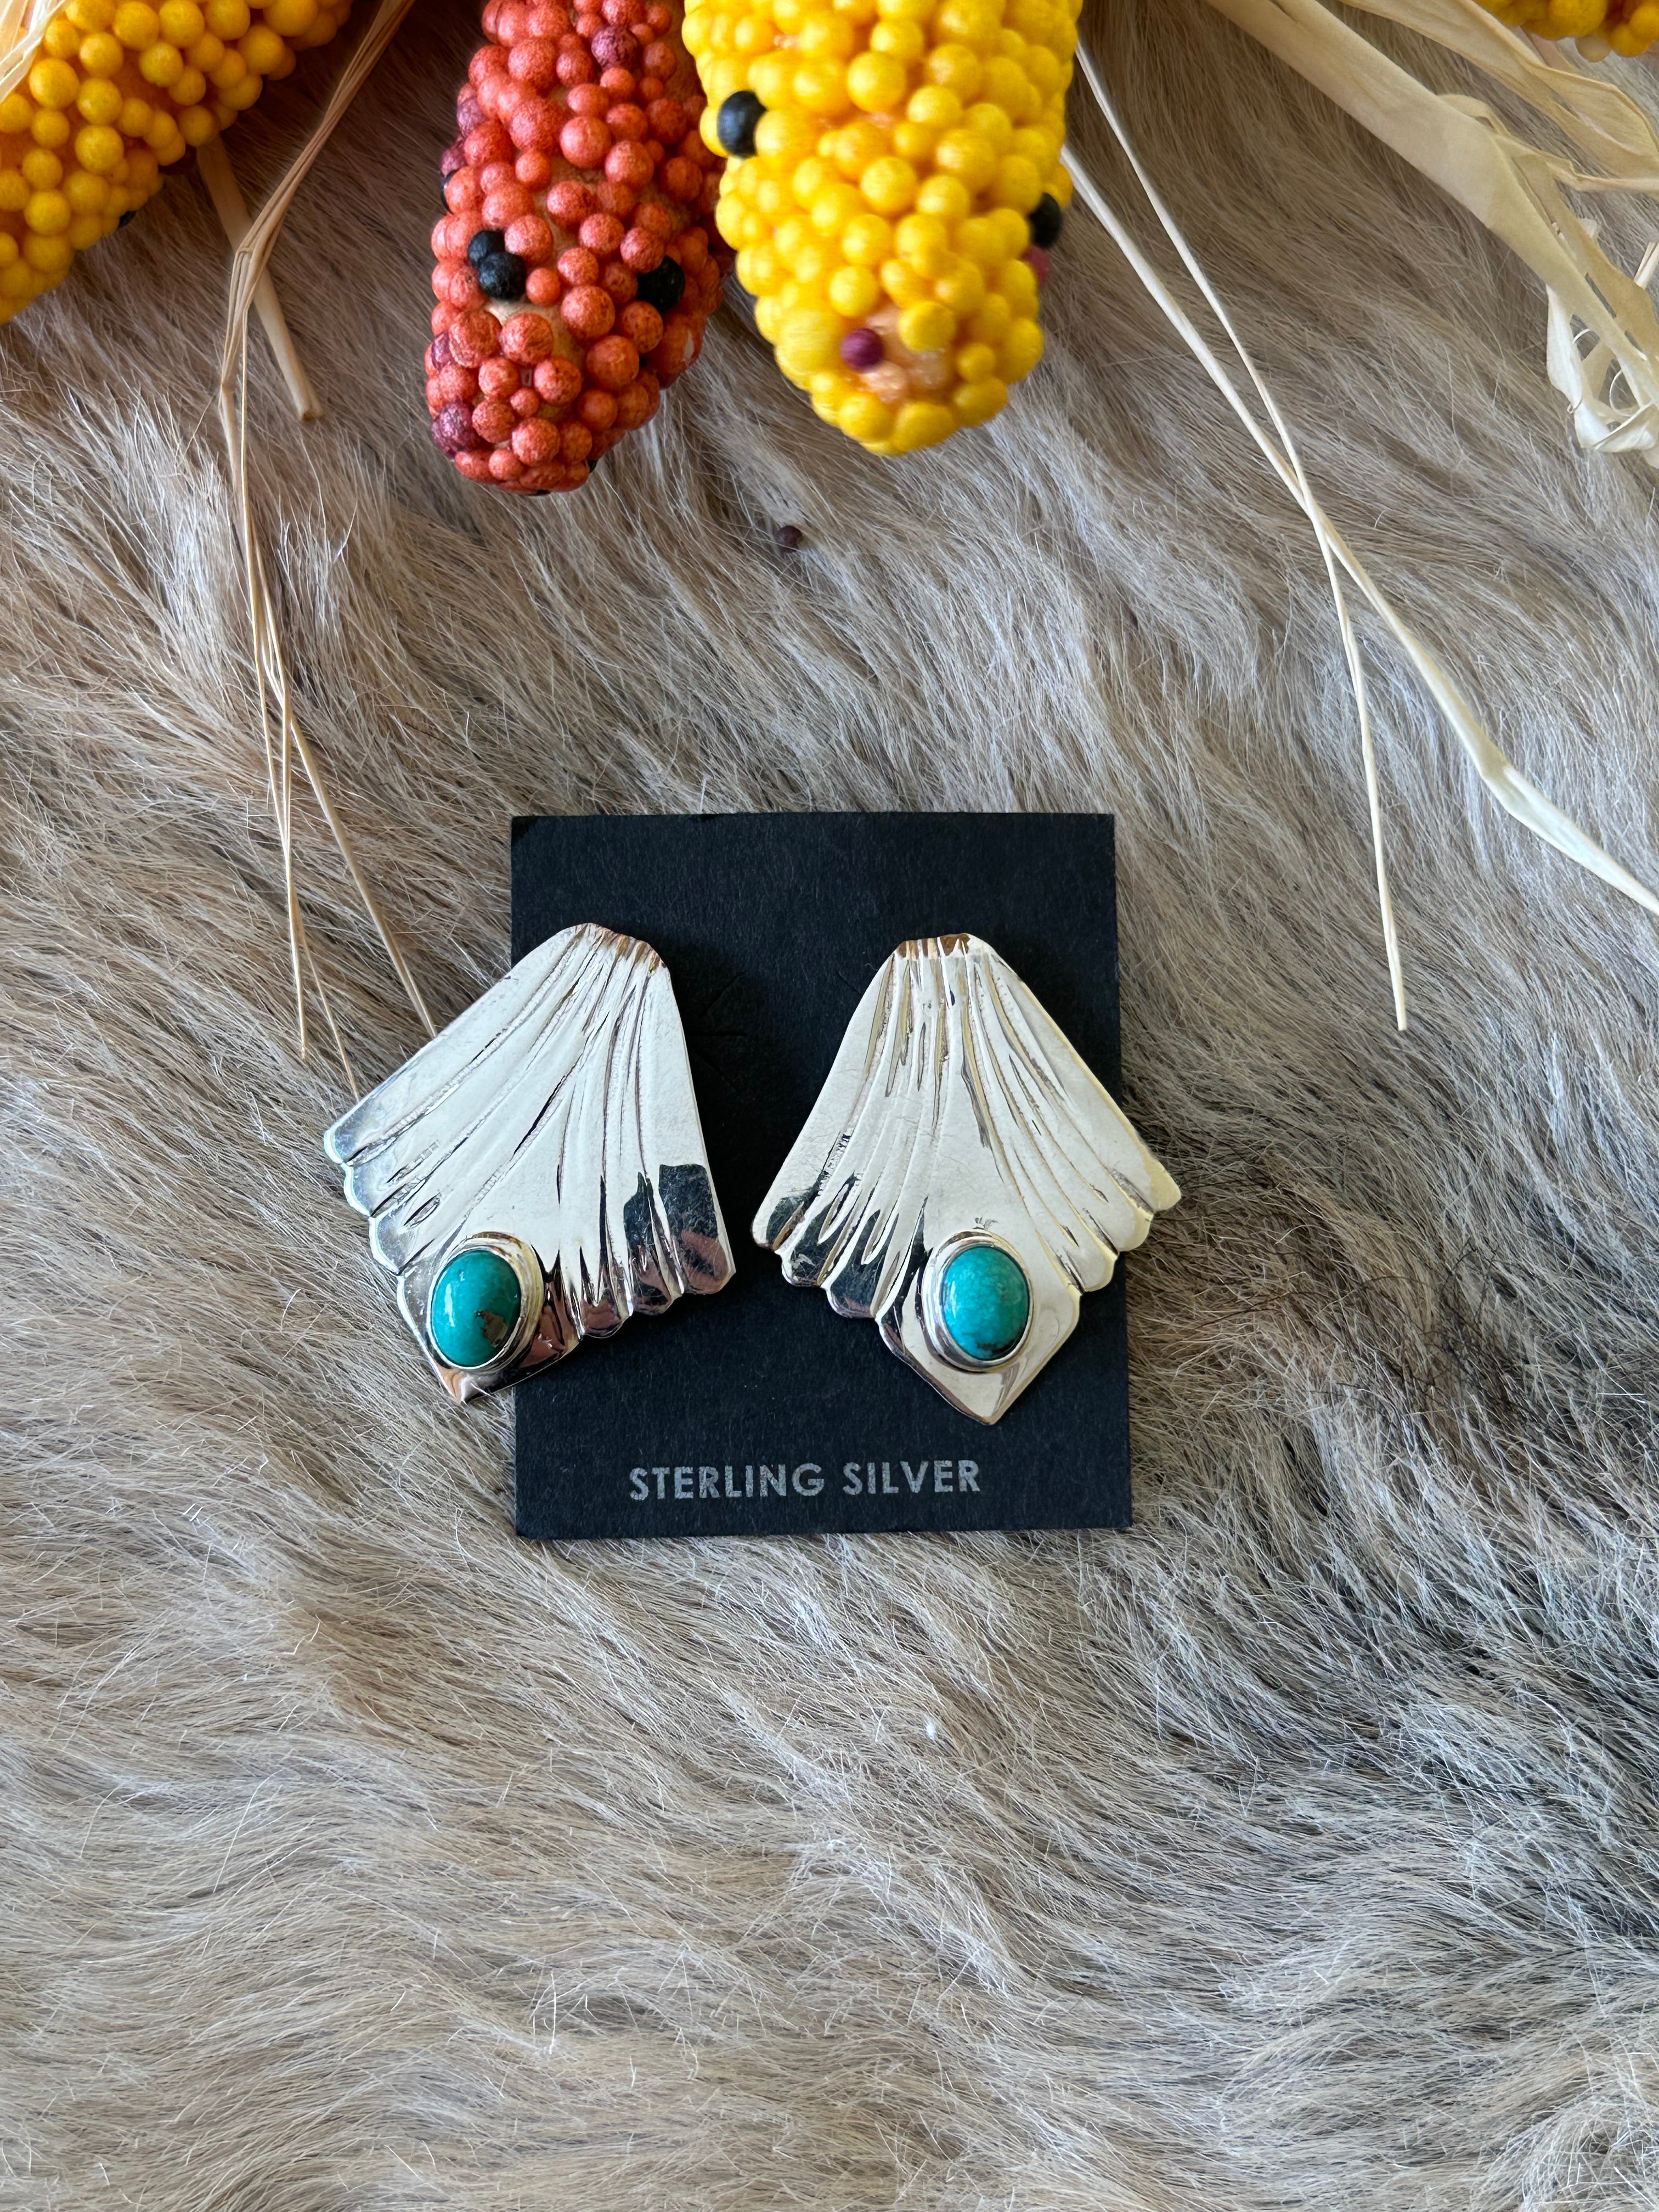 Navajo Made Kingman Turquoise & Sterling Silver Post Earrings